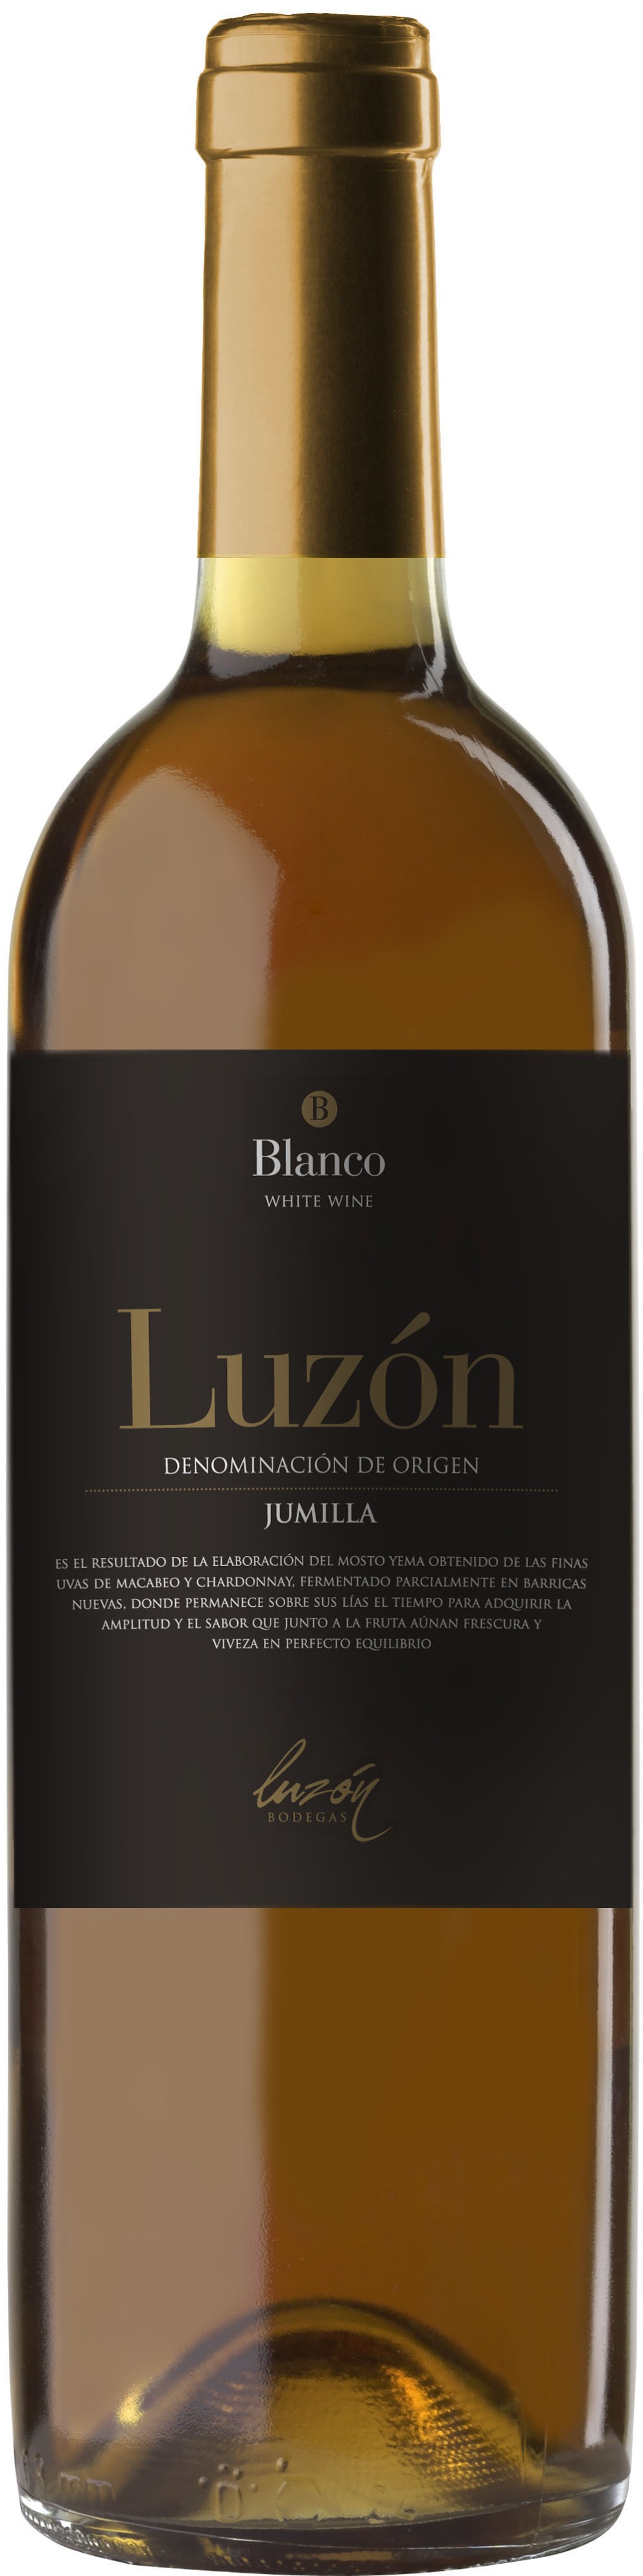 Imagen de la botella de Vino Luzón Blanco